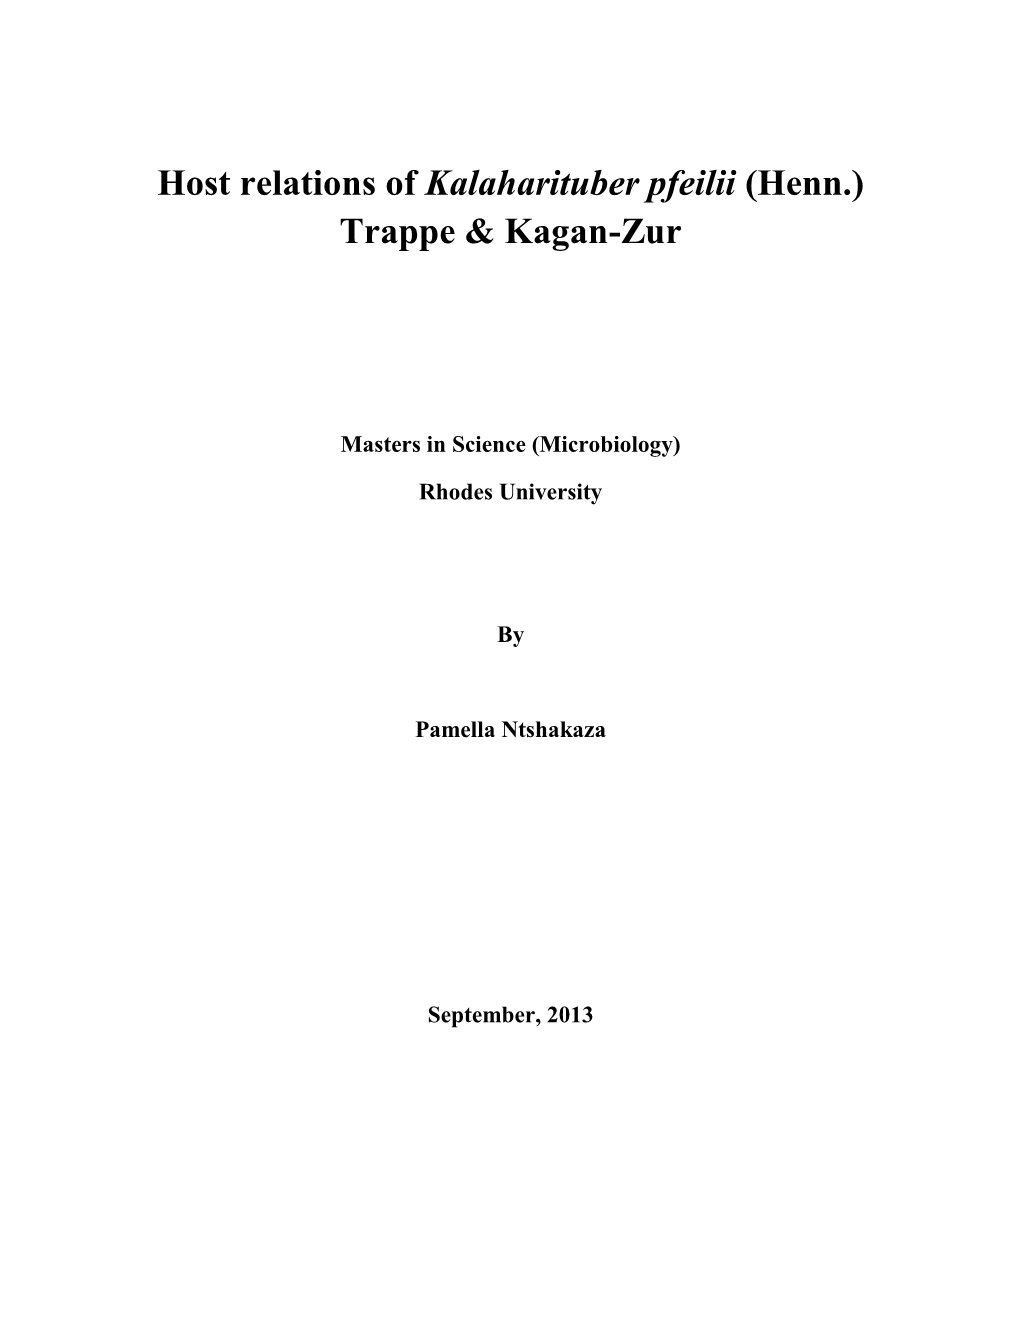 Host Relations of Kalaharituber Pfeilii (Henn.) Trappe & Kagan-Zur